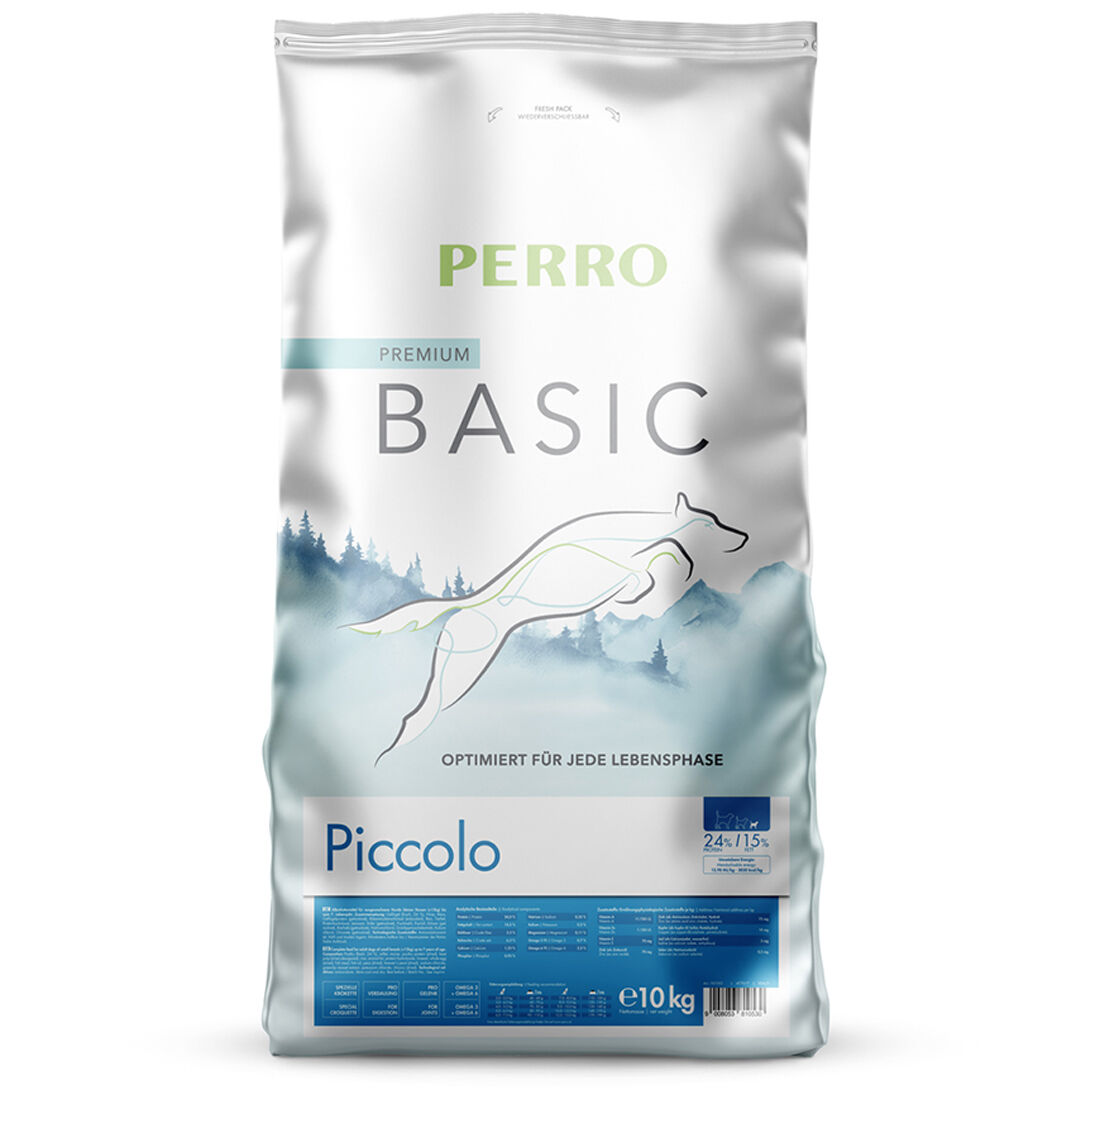 PERRO-Basic-Piccolo-Basic-hochwertiges-trockenfutter-kleiner-hund-10kg-181050